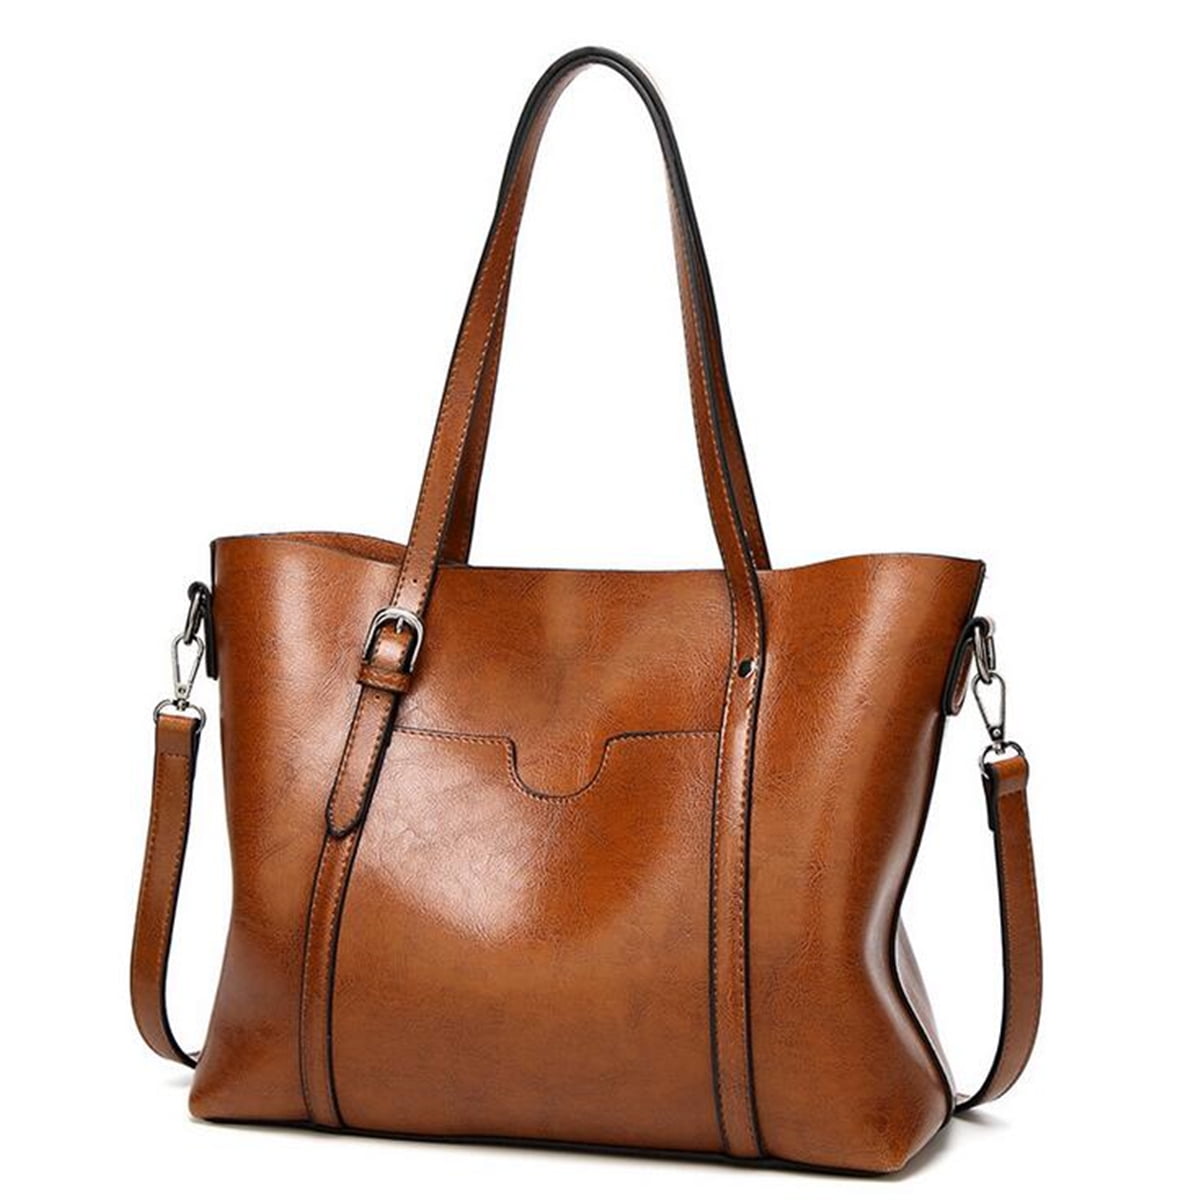 Silver Tote Bag Large Leather Purse Shopping Single Shoulder Satchel | eBay